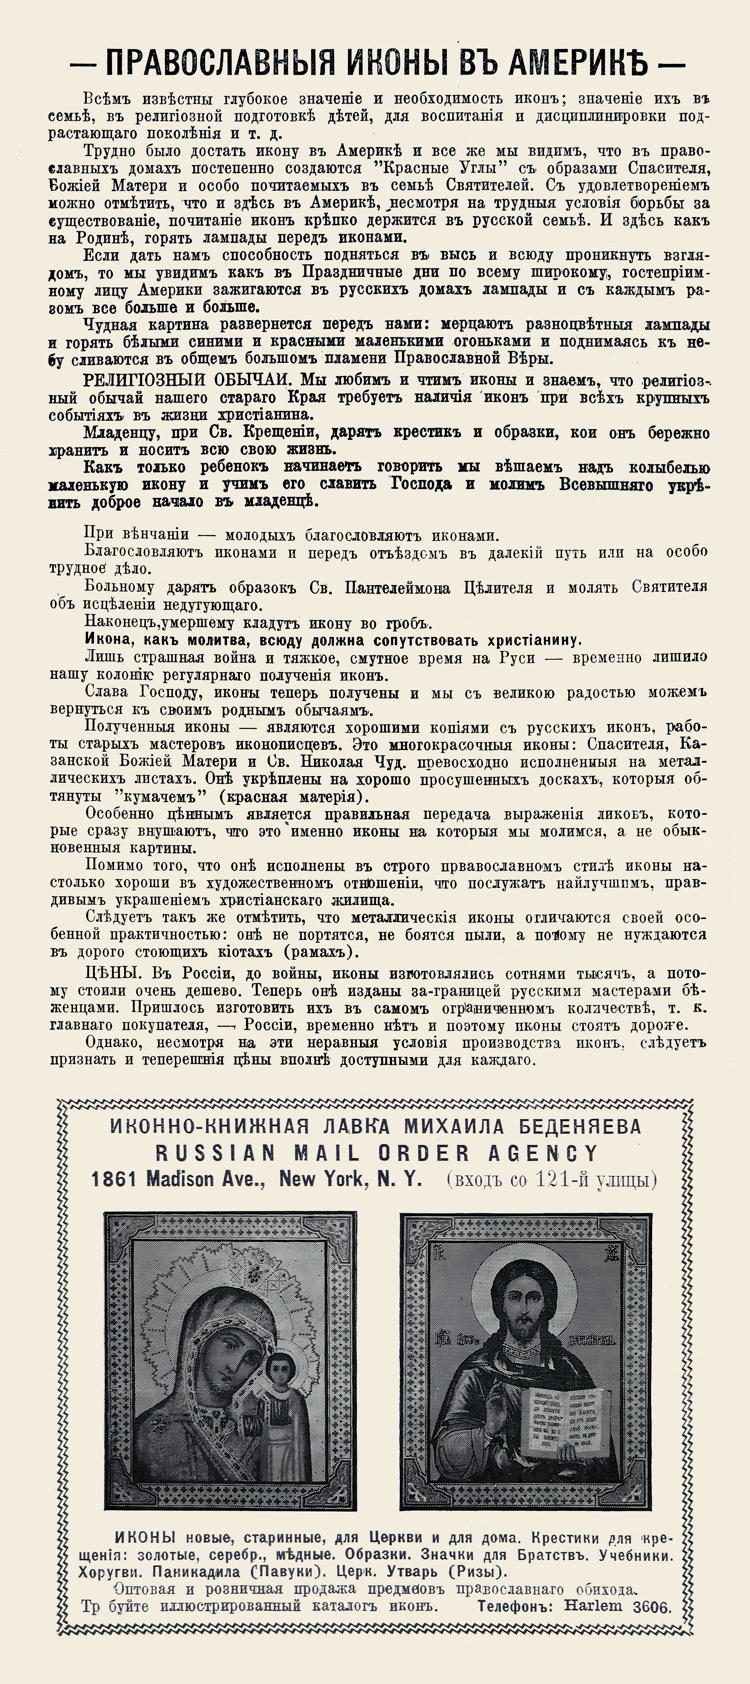 New York, Russian Mail Order Agency, Михаилъ Беденяевъ, Mihail Bedenyaev, Bendenyev